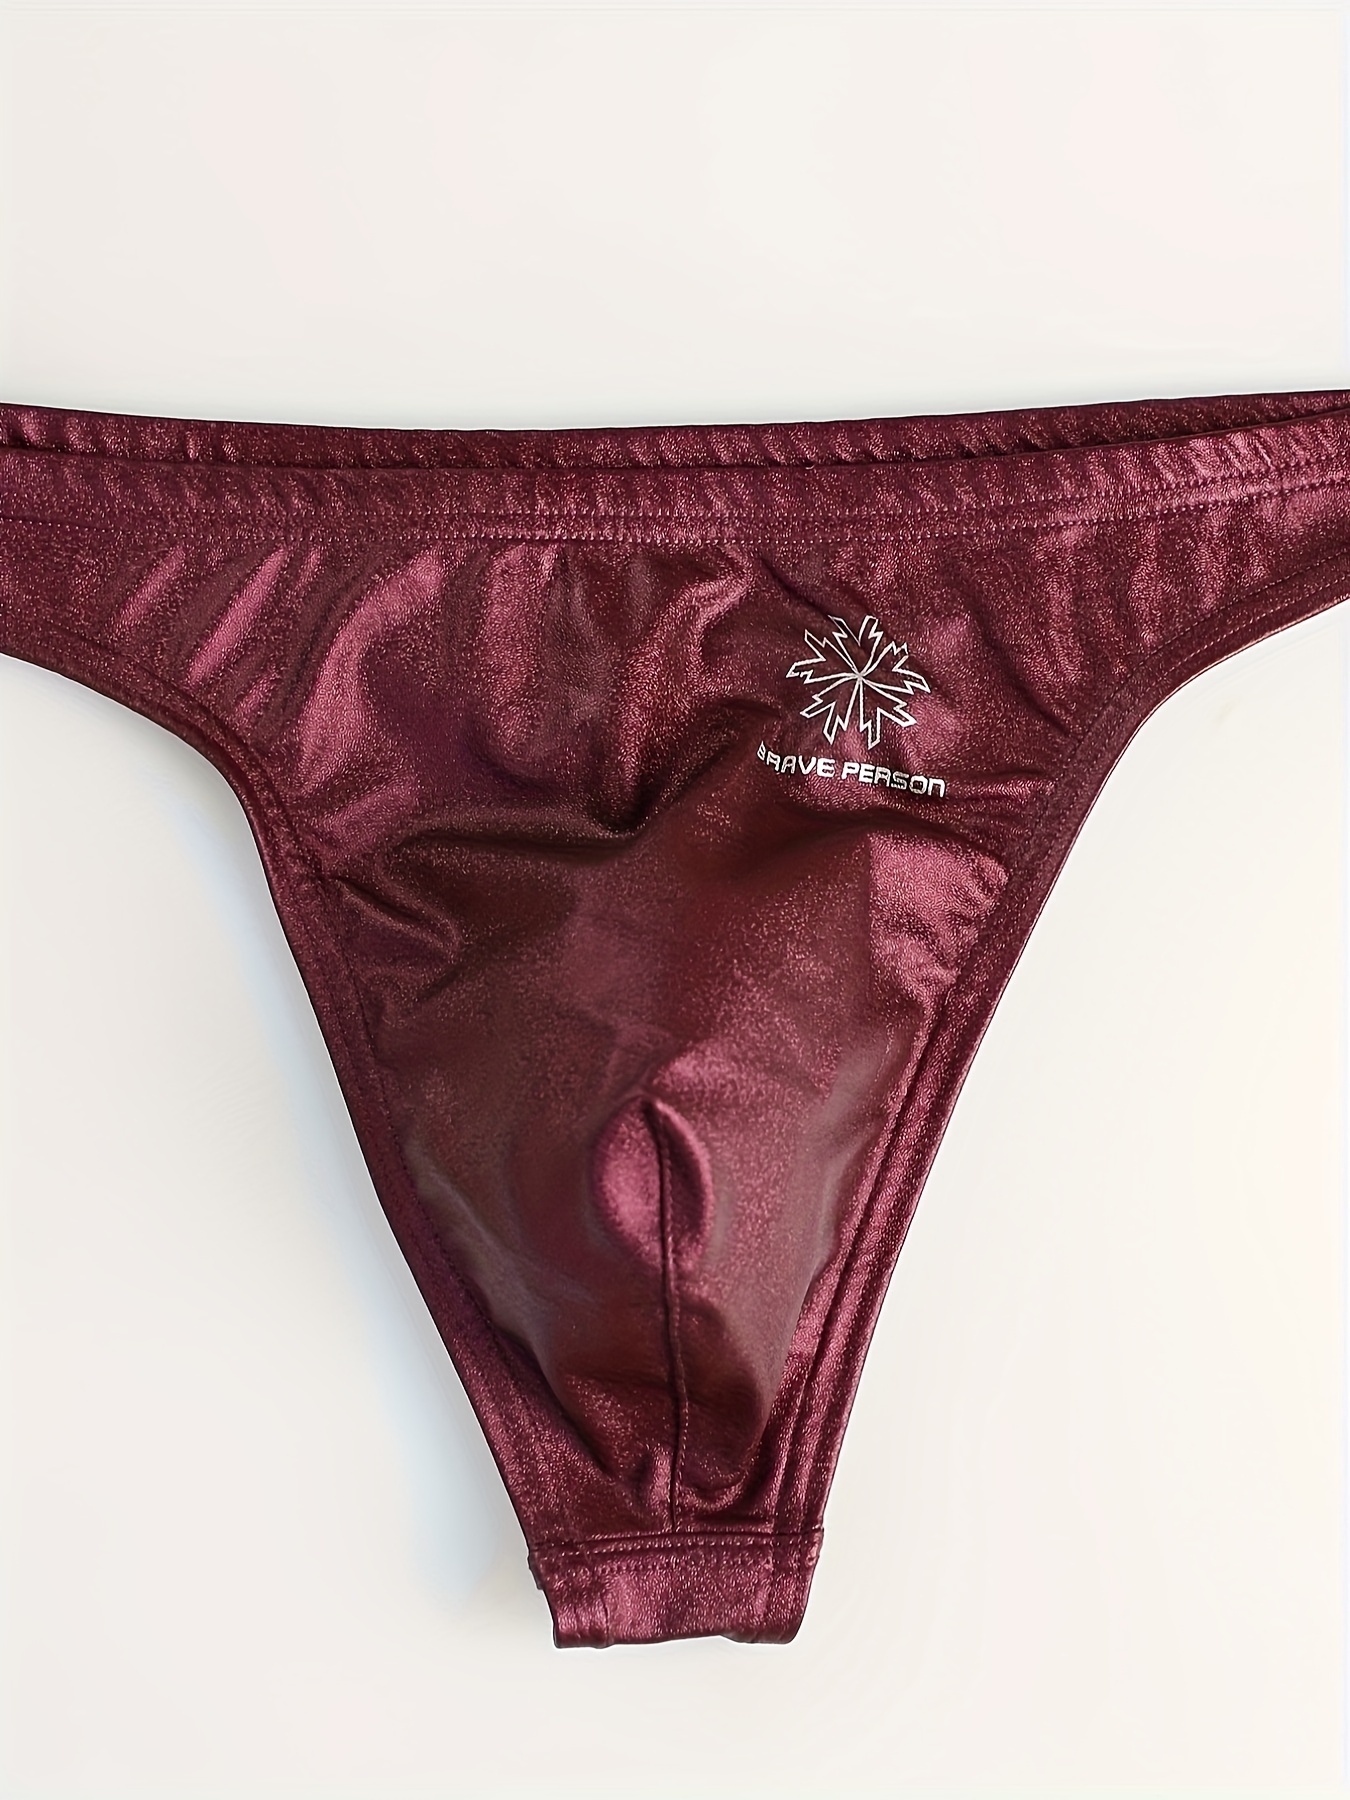 Hmwy-mens Faux Leather Jockstrap Underwear Backless Briefs Thongs G-string  Pouch T-back